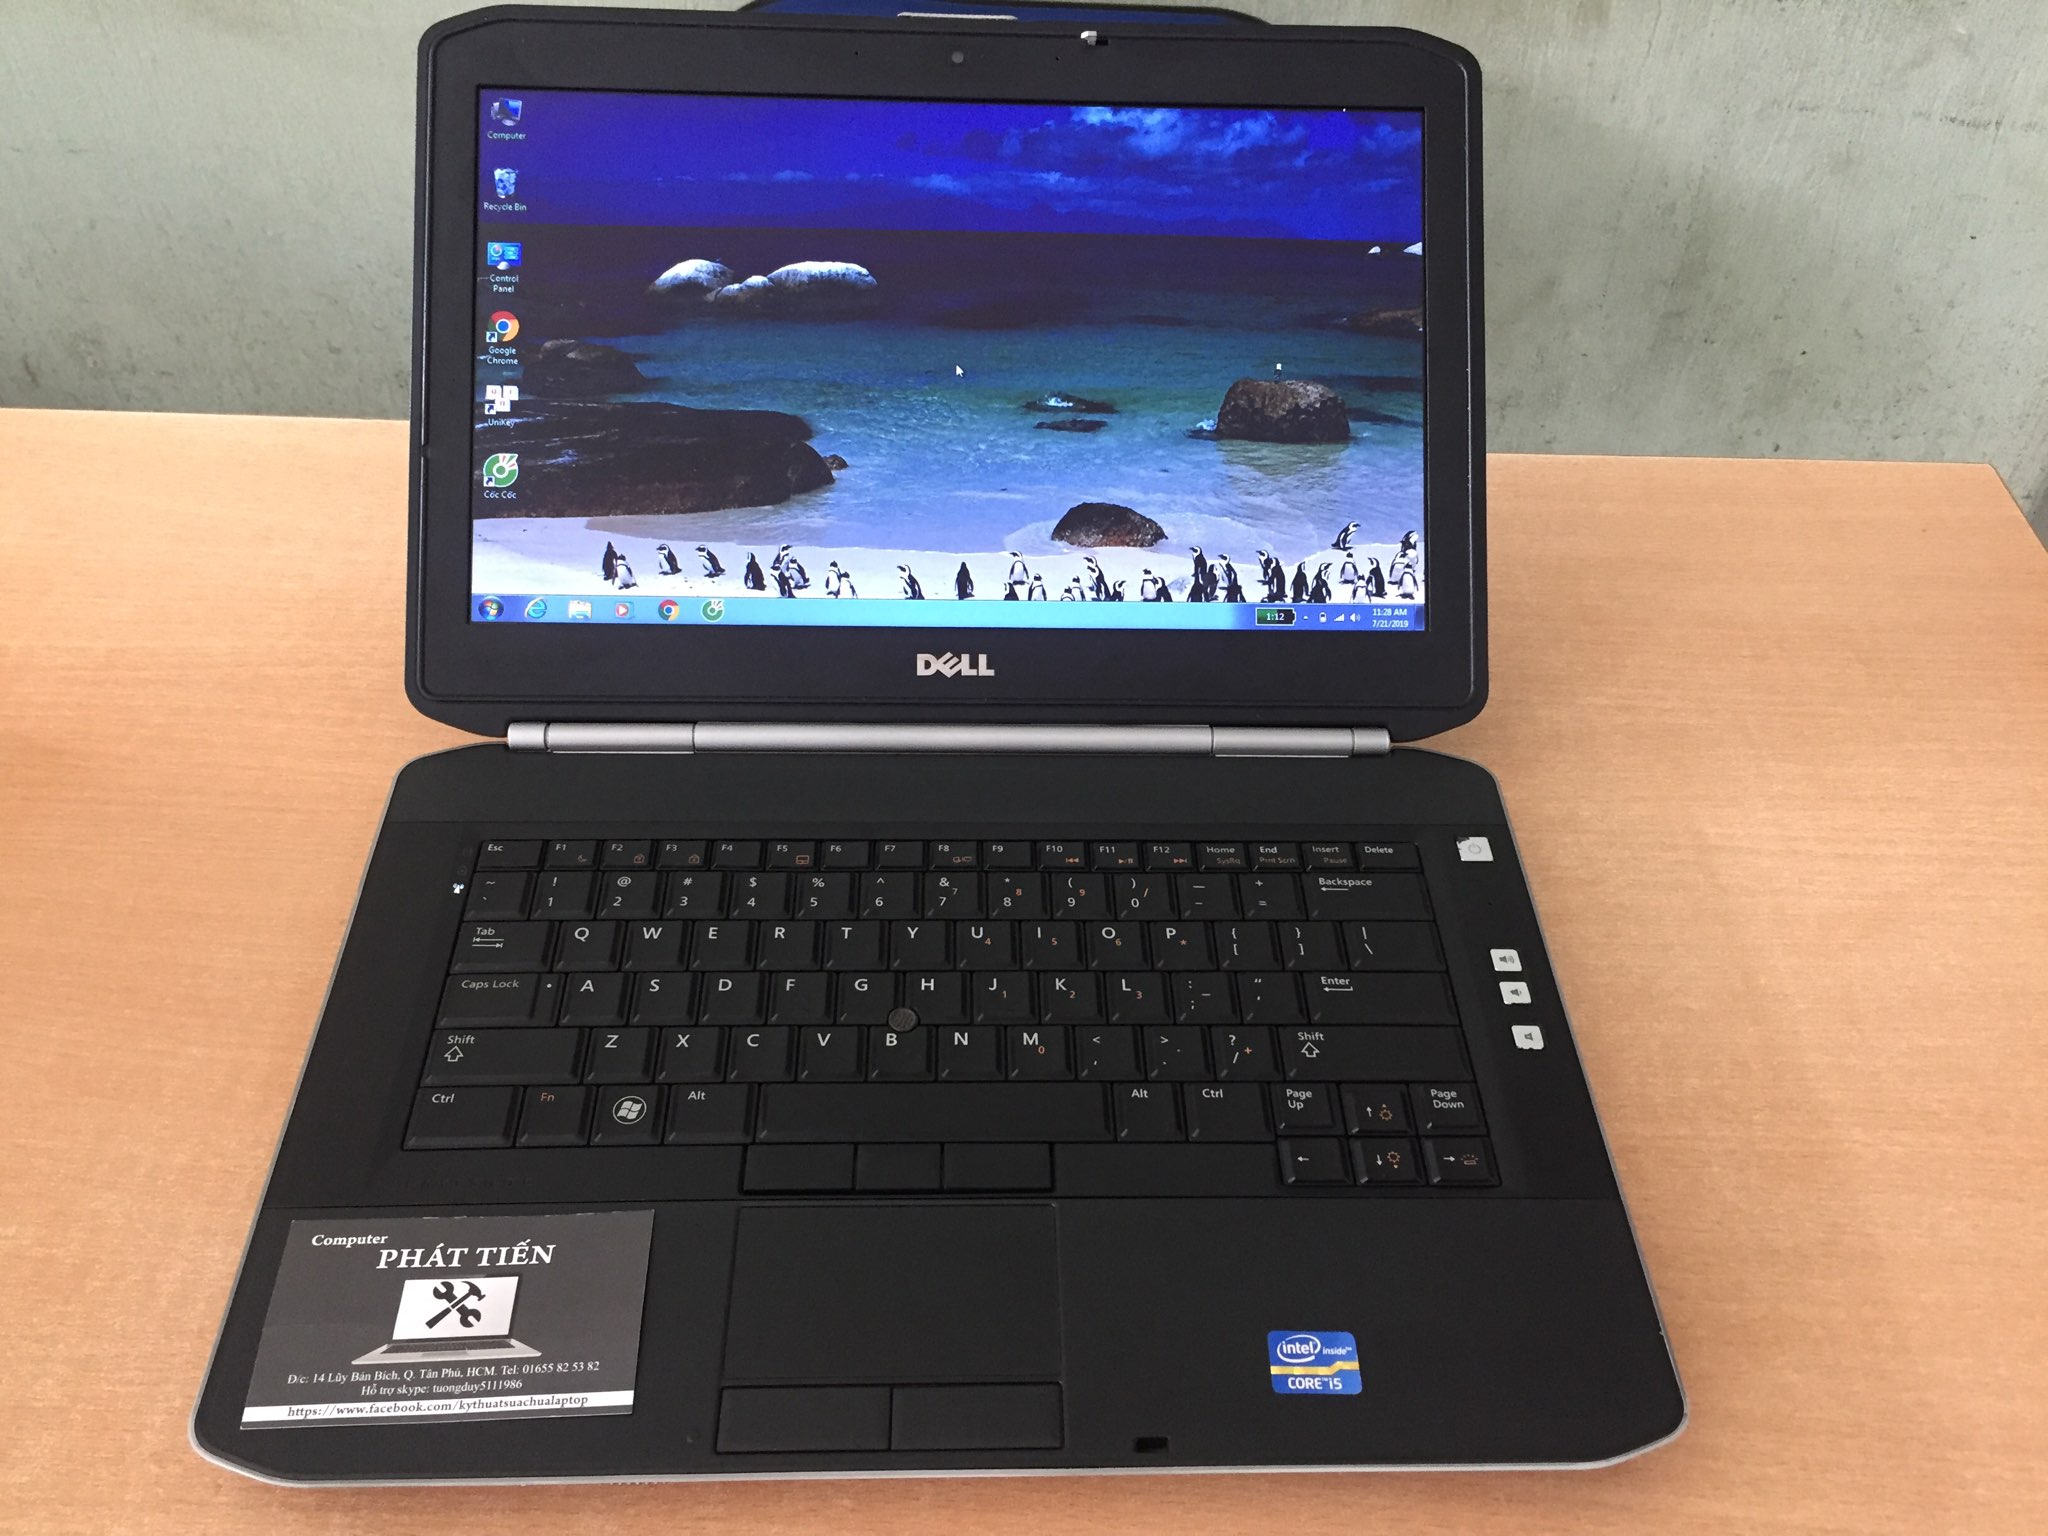 Laptop Dell E5420 ị5 giá sỉ HCM